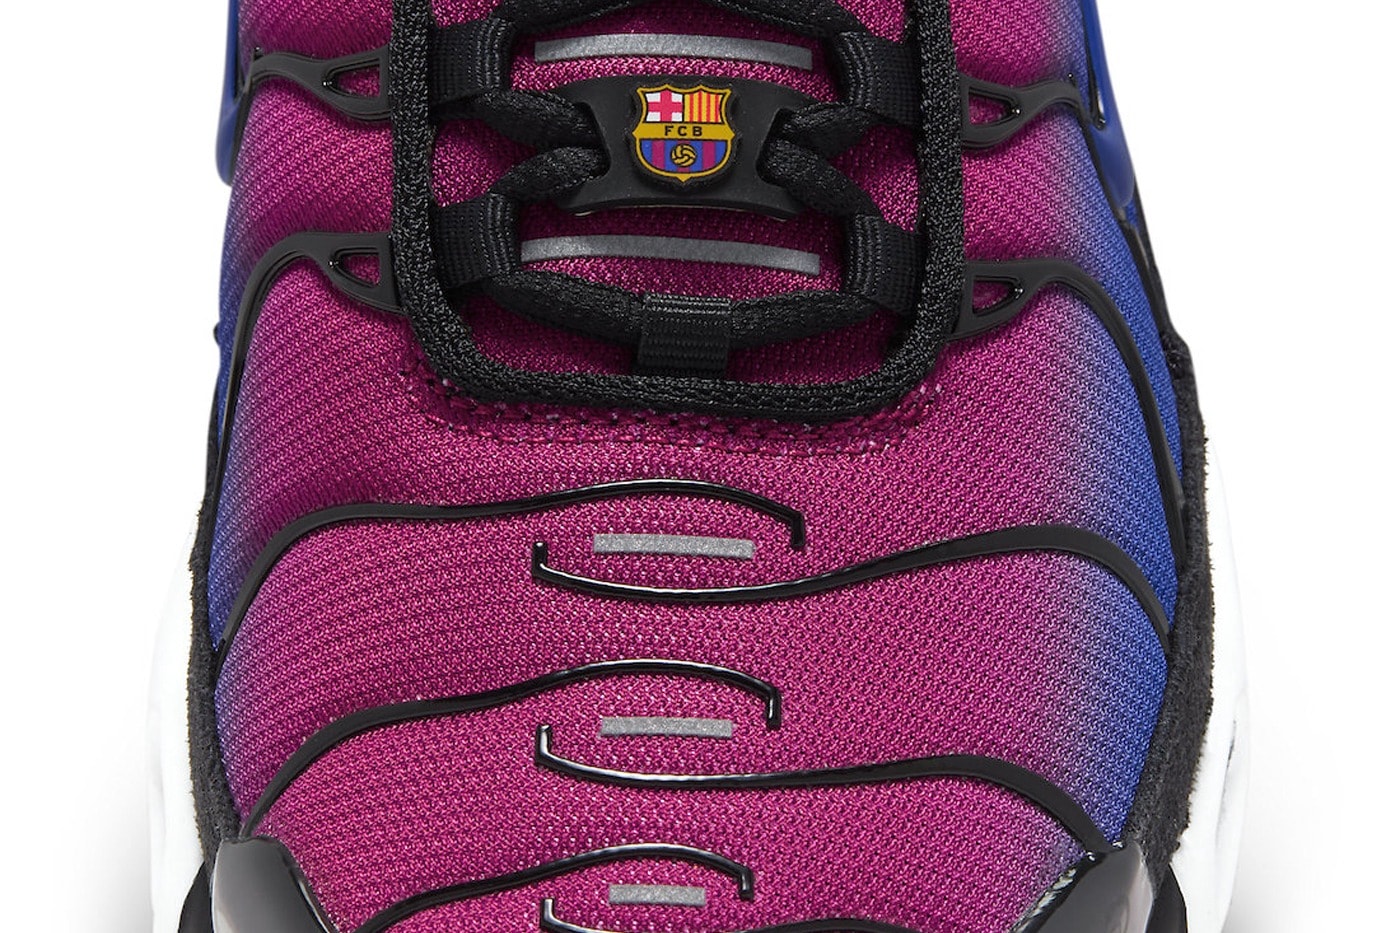 Patta x Nike Air Max Plus 最新聯名配色「F.C. Barcelona」推出